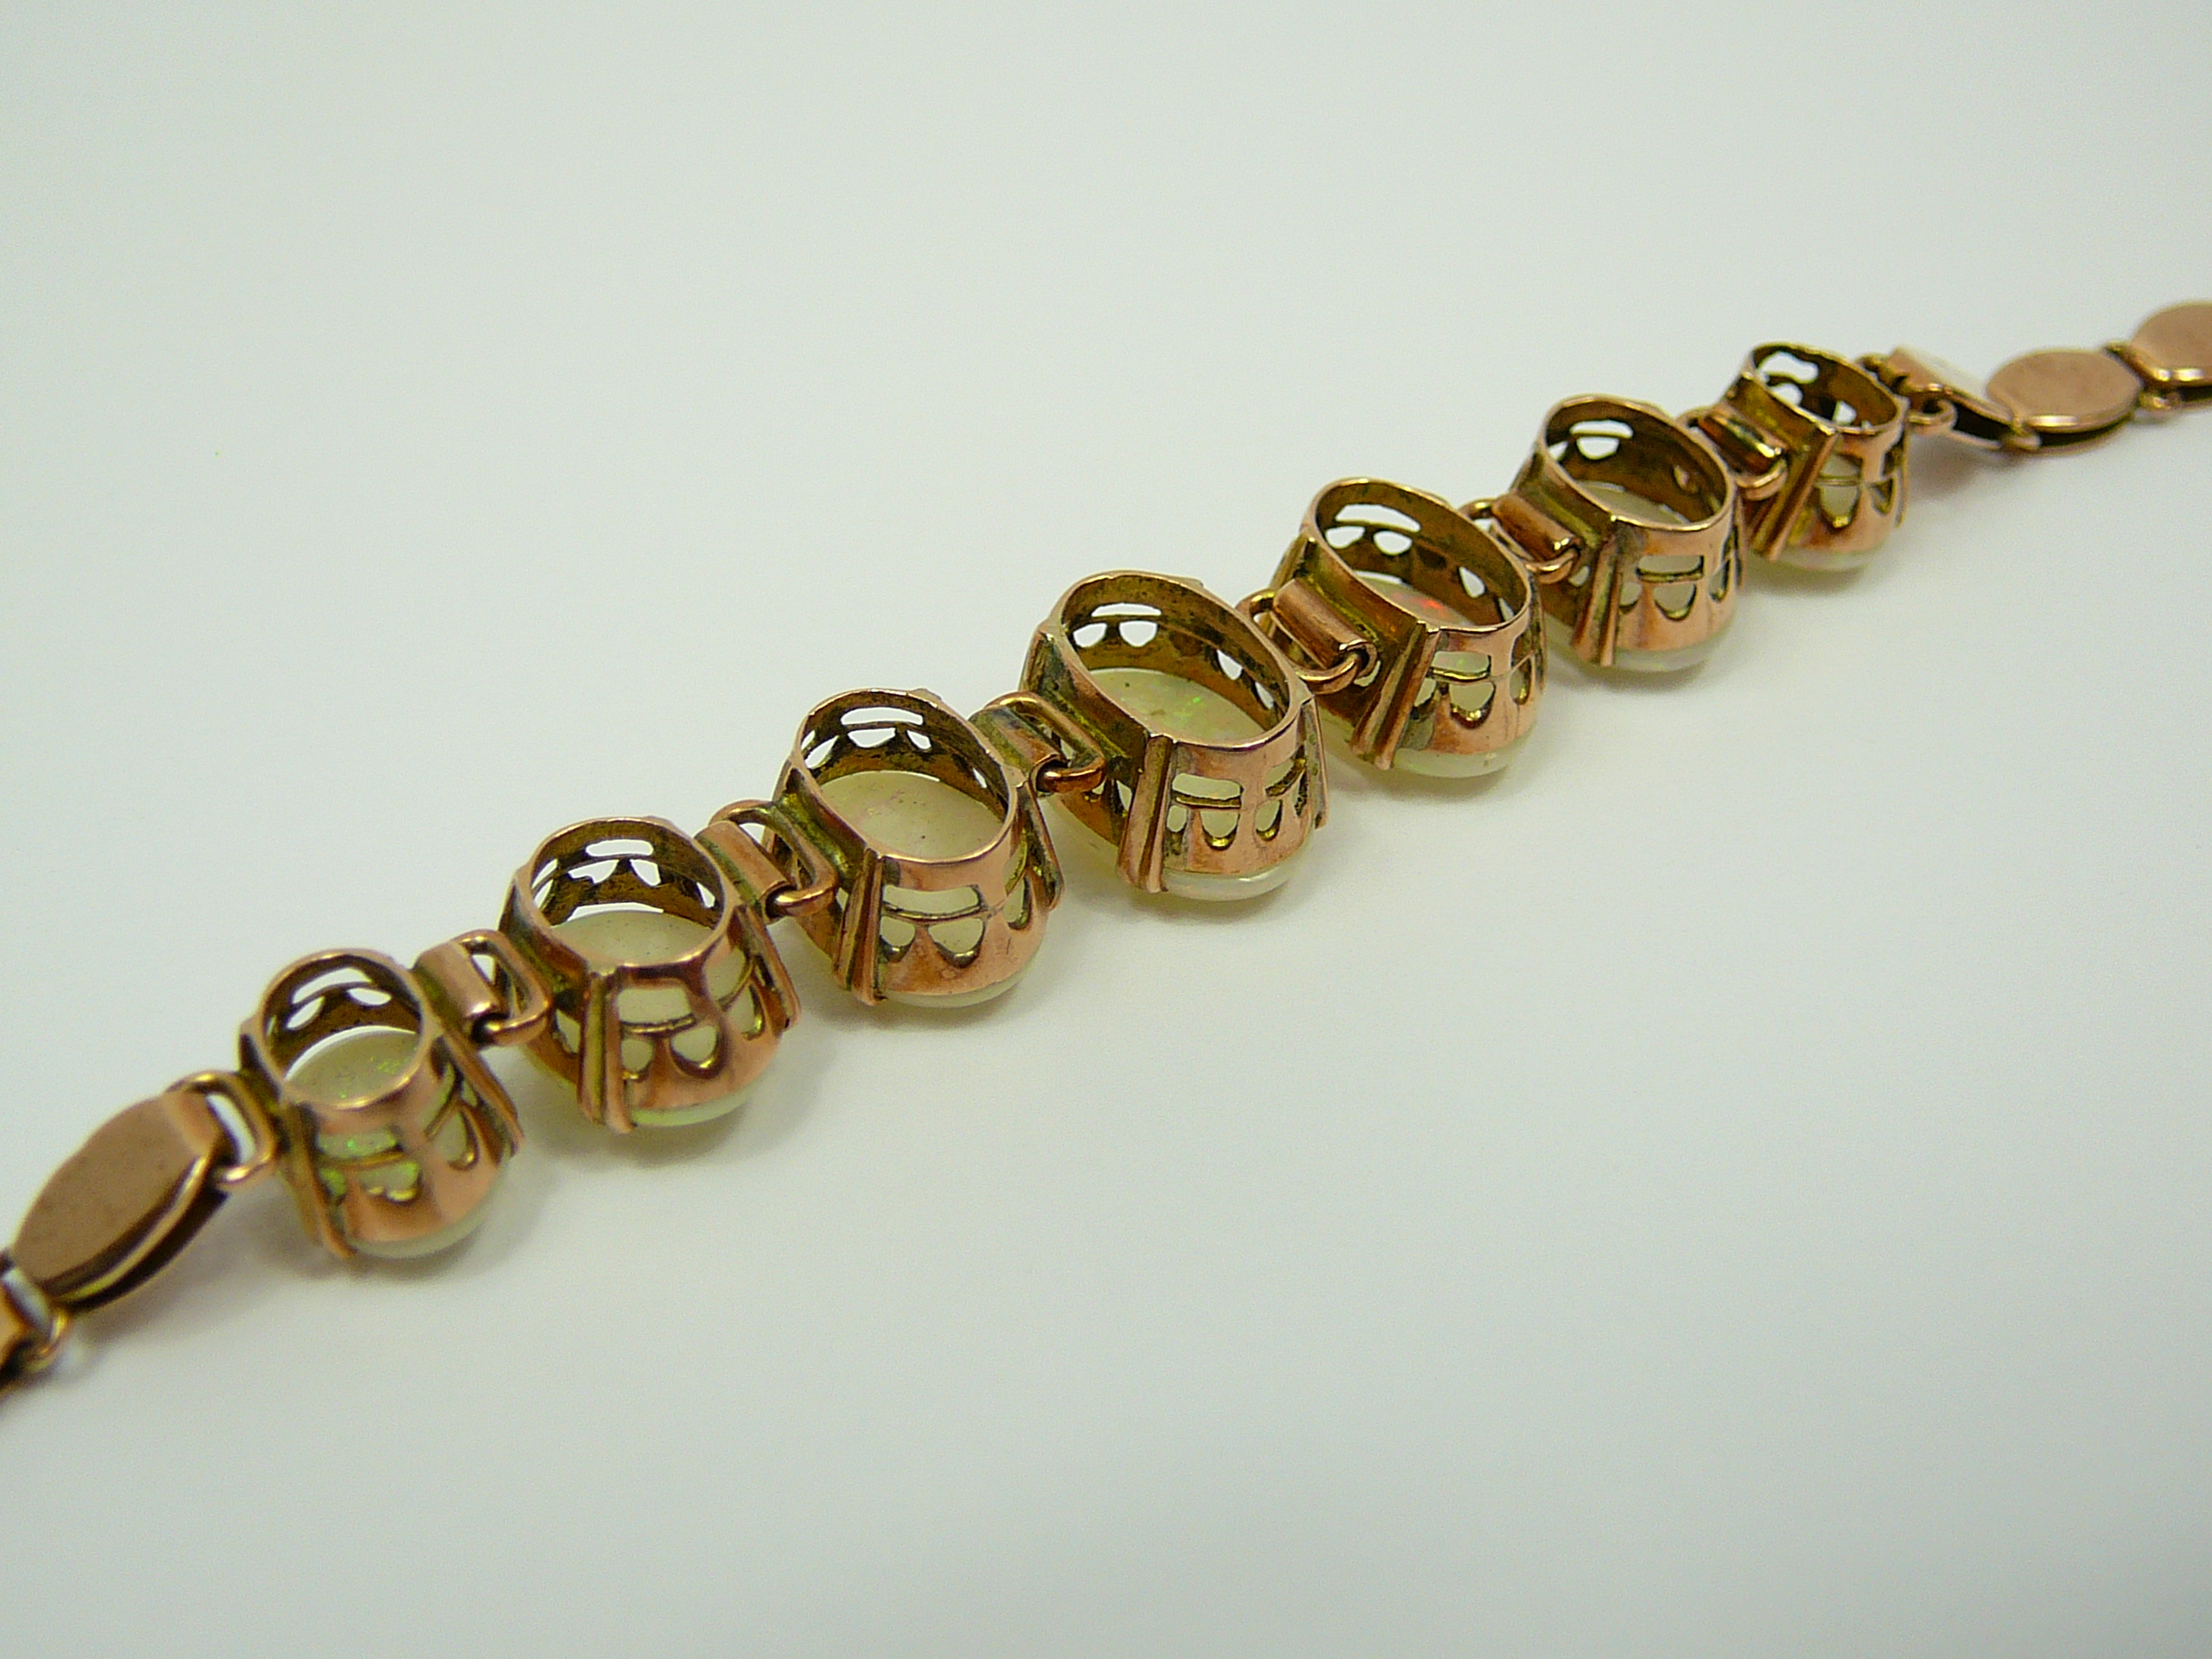 14ct rose gold and opal bracelet - Image 3 of 3